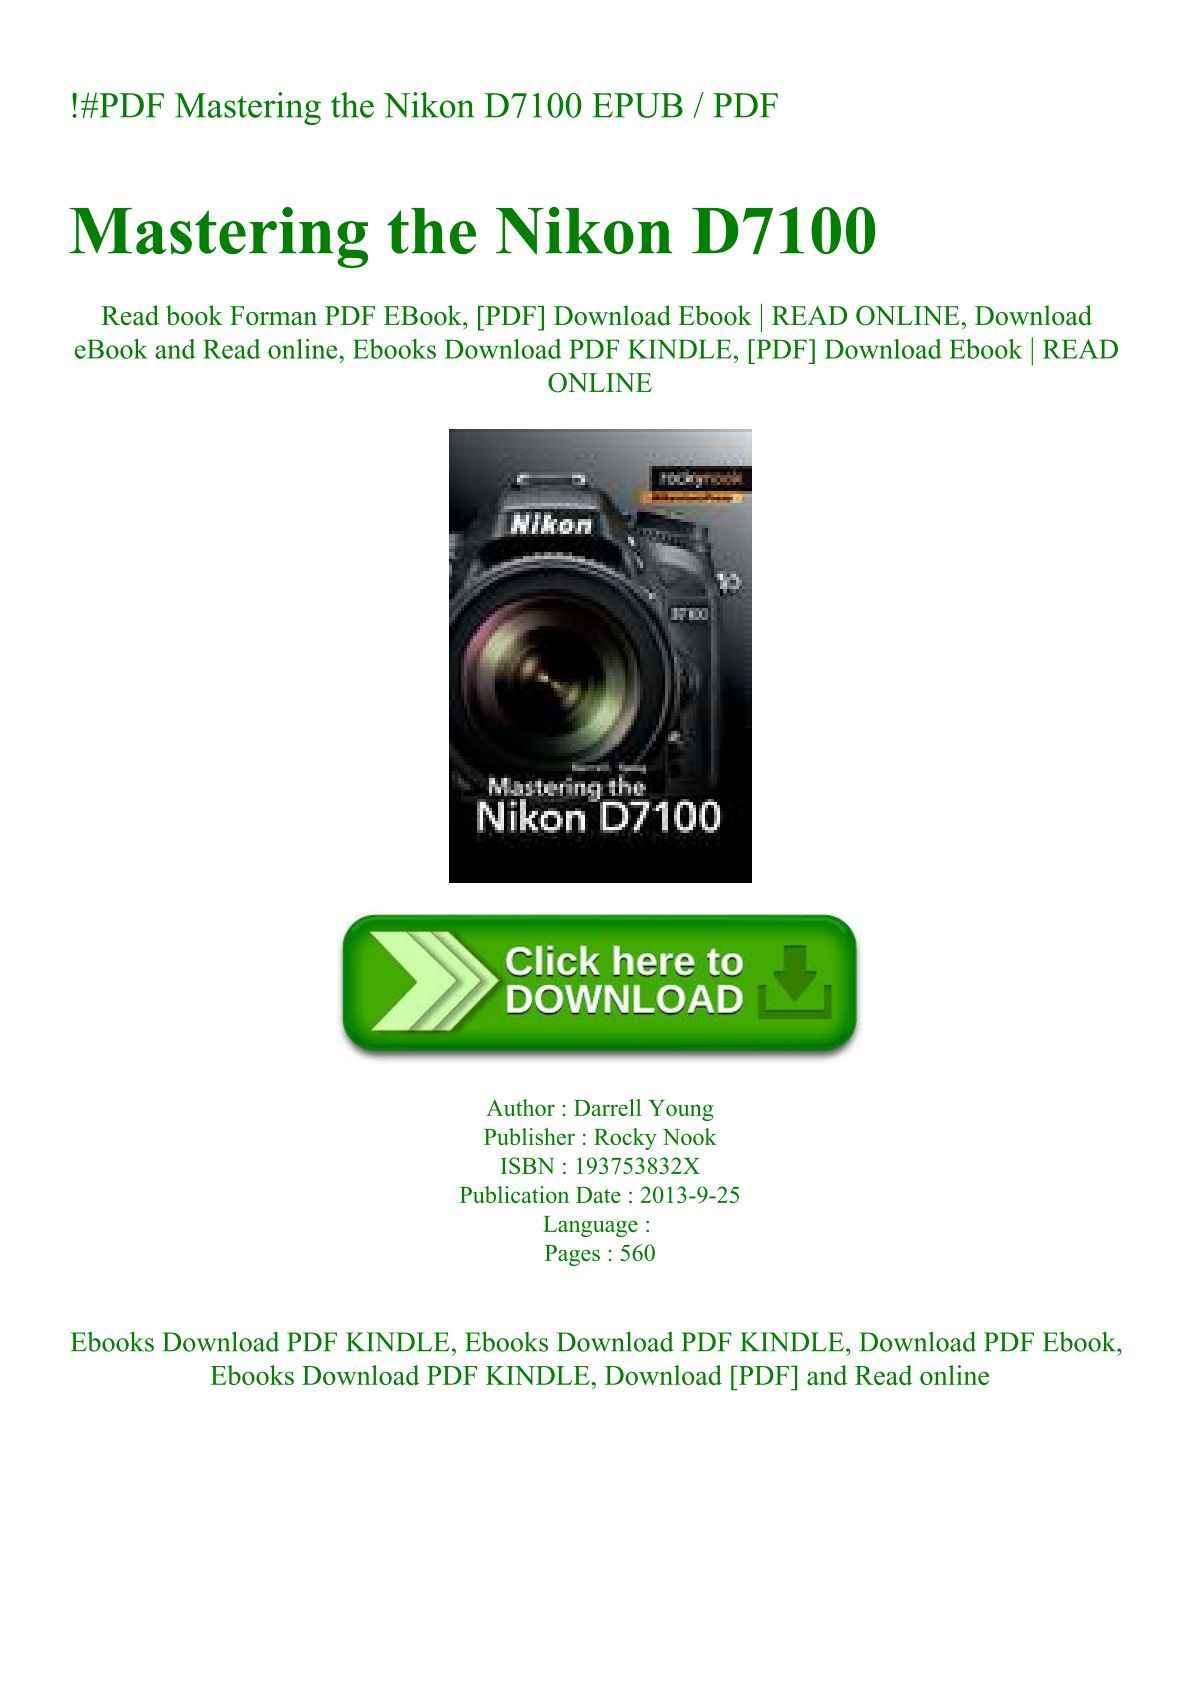 PDF Mastering the Nikon D7100 EPUB PDF